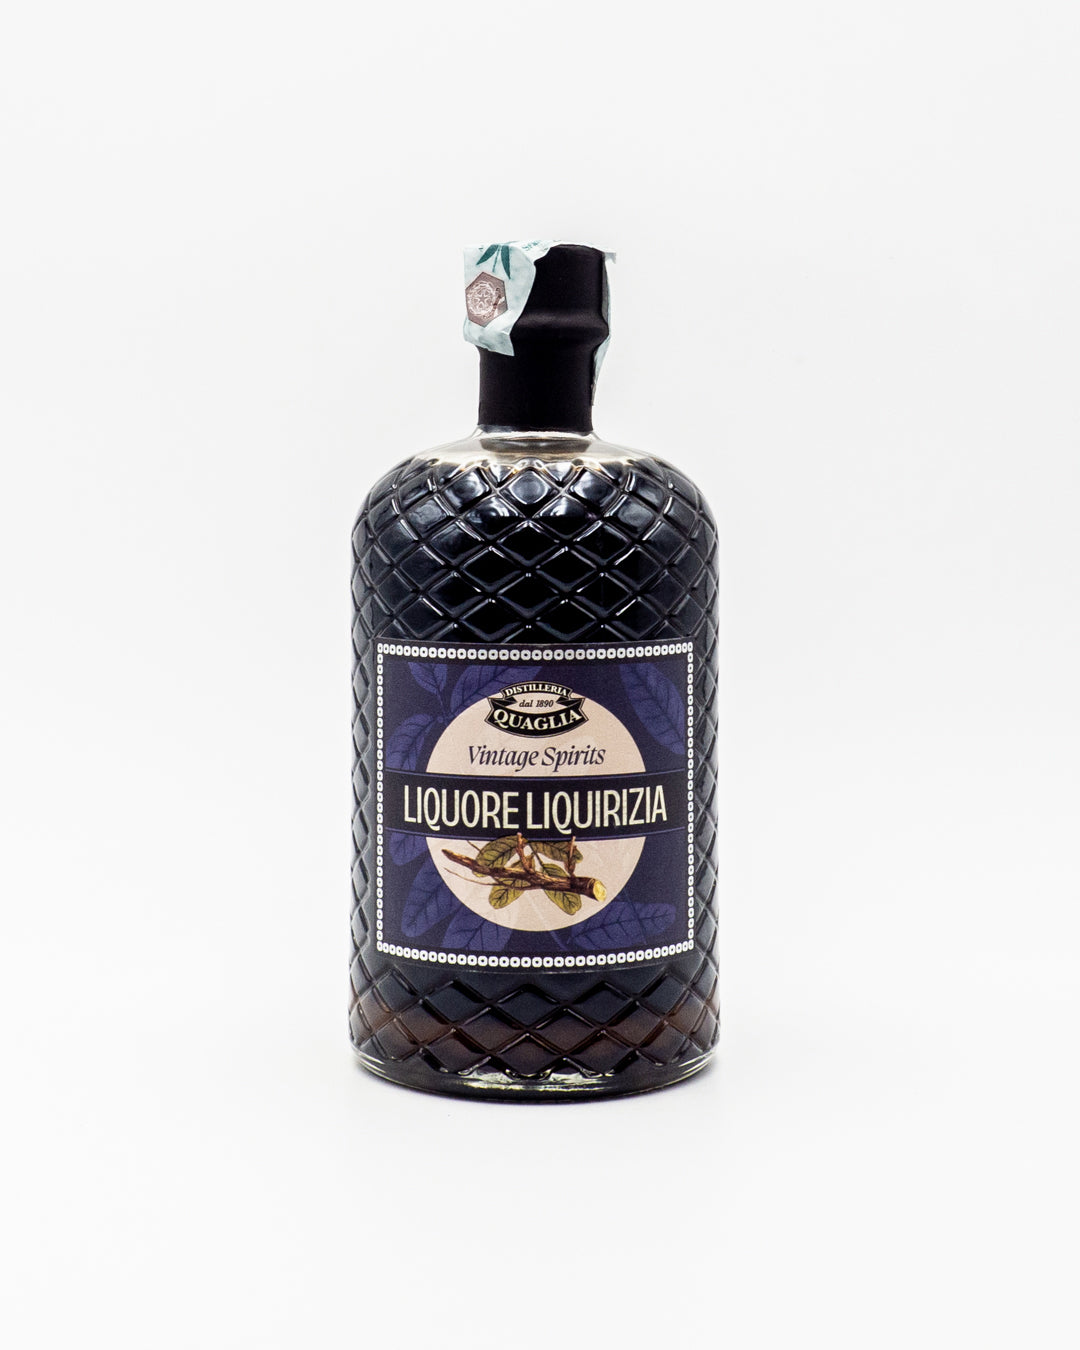 liquore-di-liquirizia-vintage-spirits-distilleria-quaglia-20-0-70l